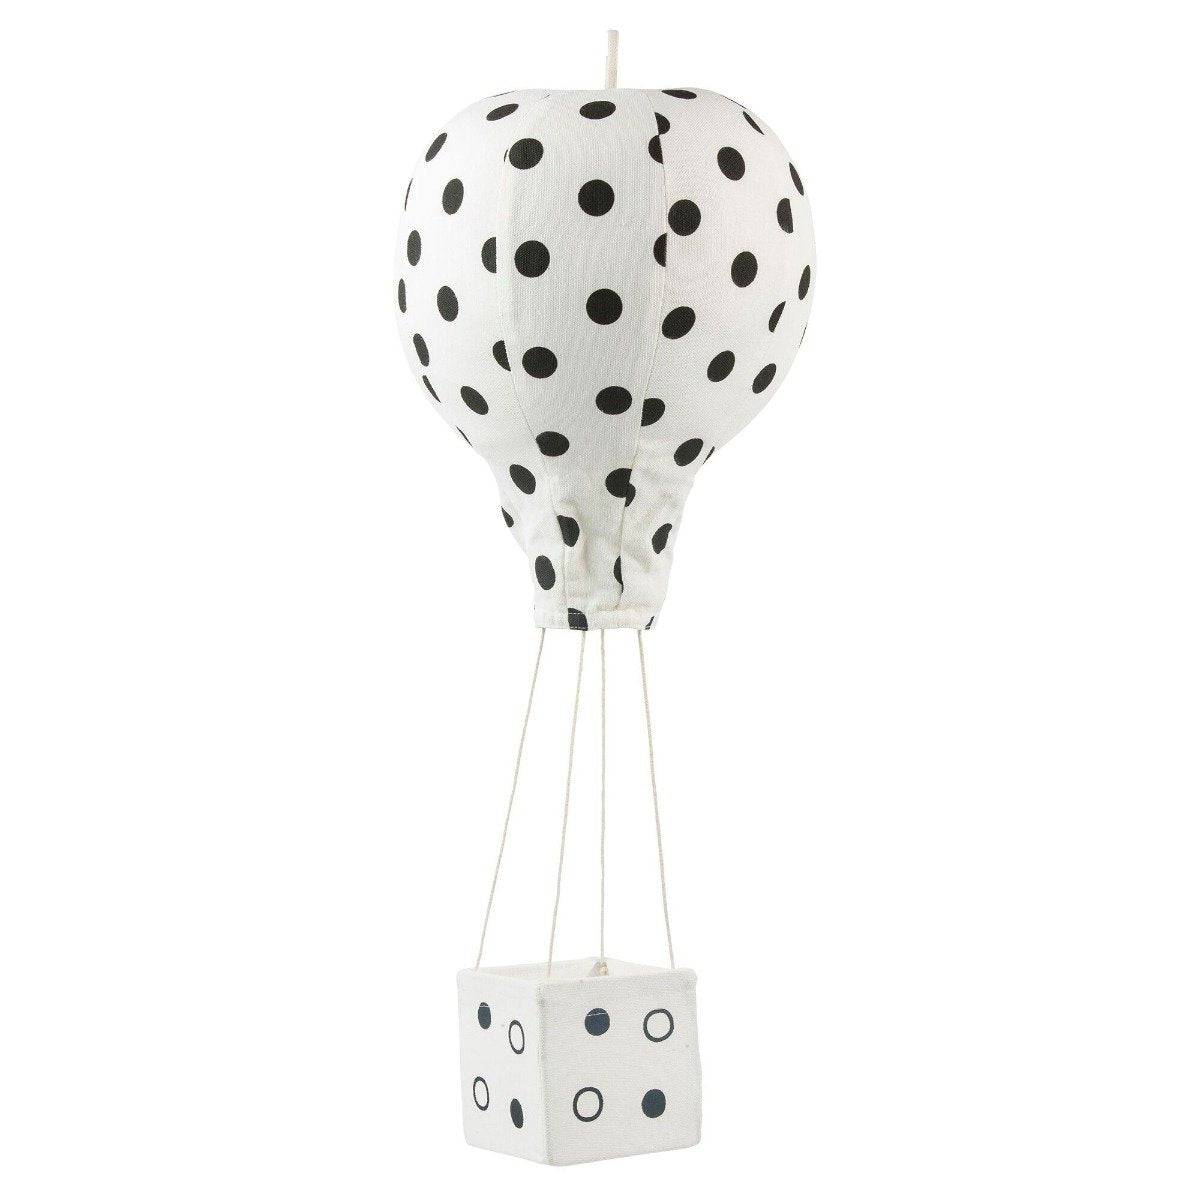 Lil' Polka Dot Hot Air Balloon Mobile in Black - Twinkle Twinkle Little One